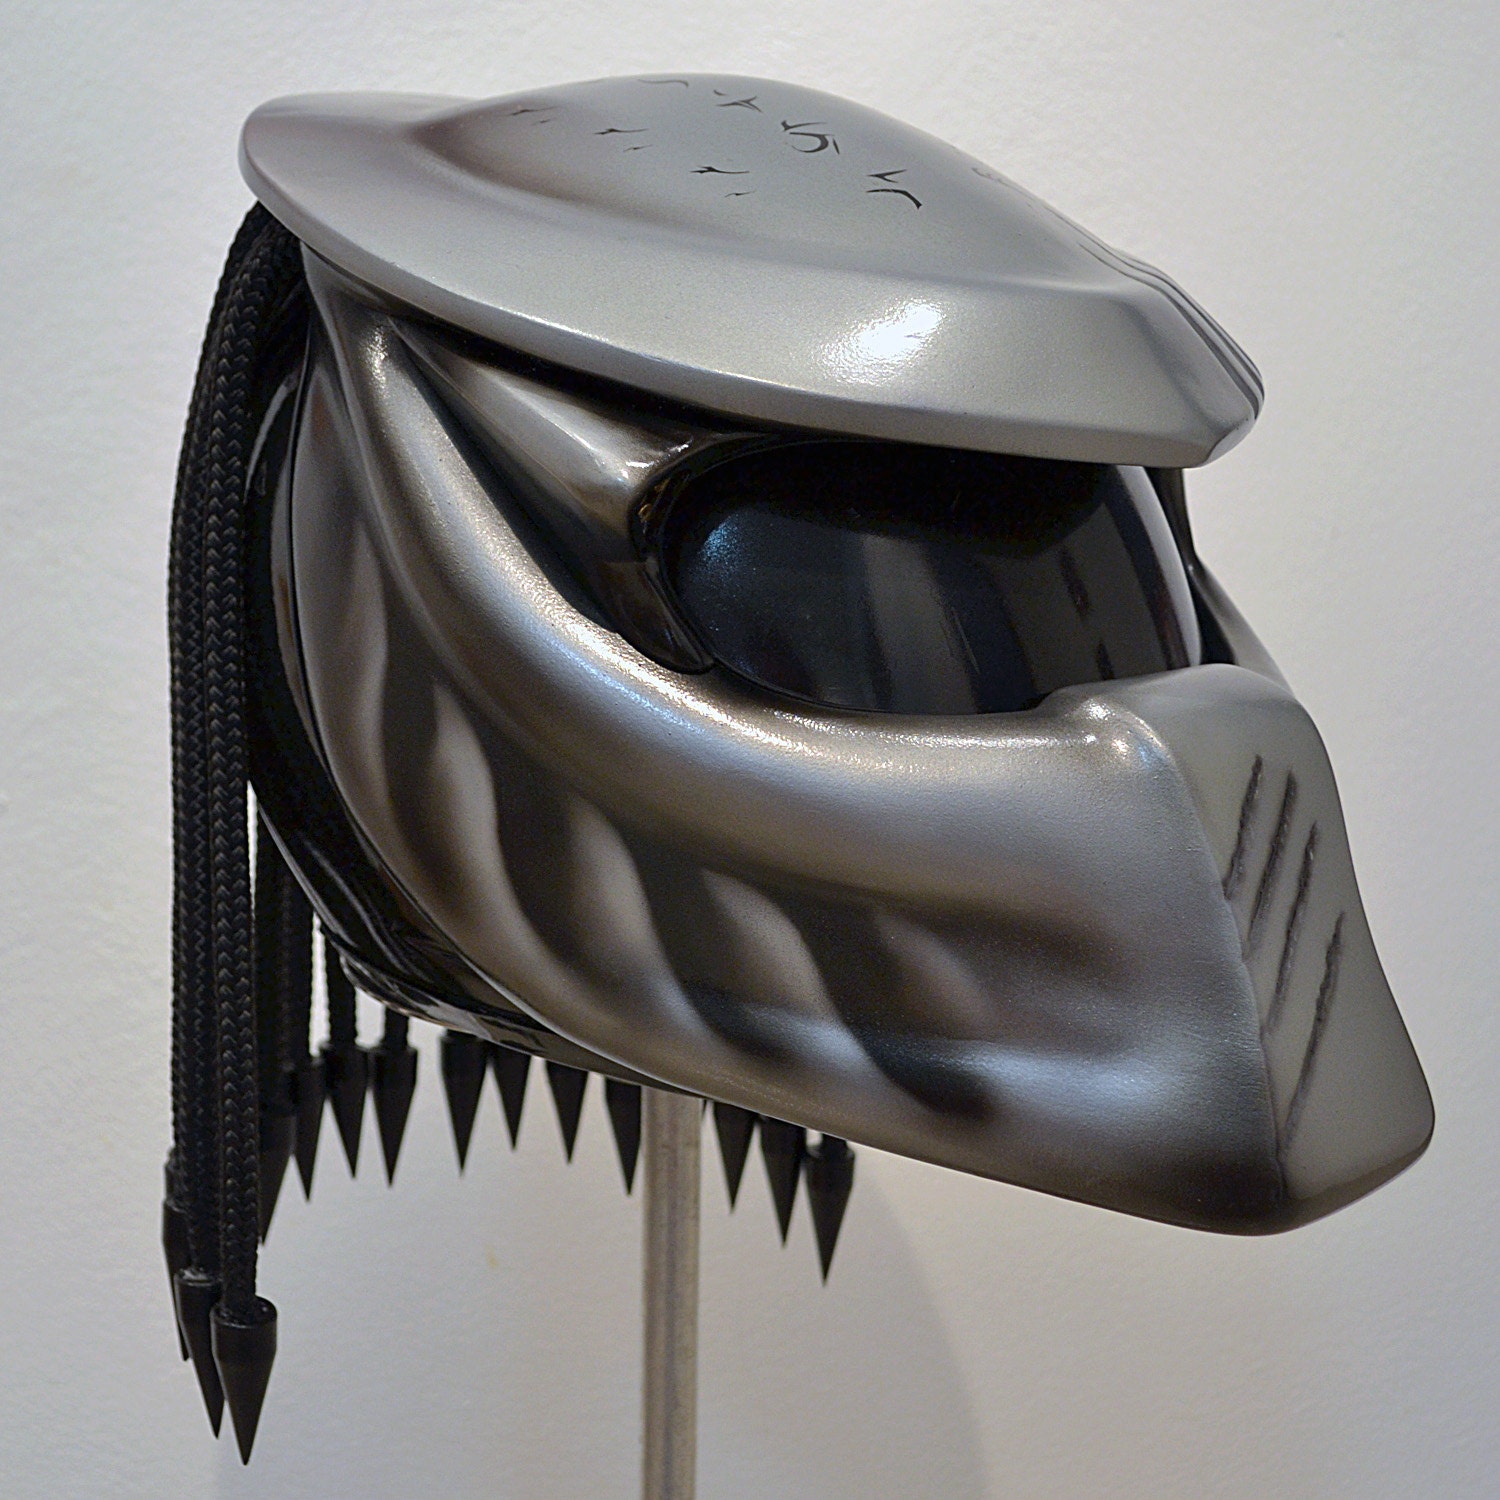 Predator full face motorcycle helmet. Unique exclusive custom